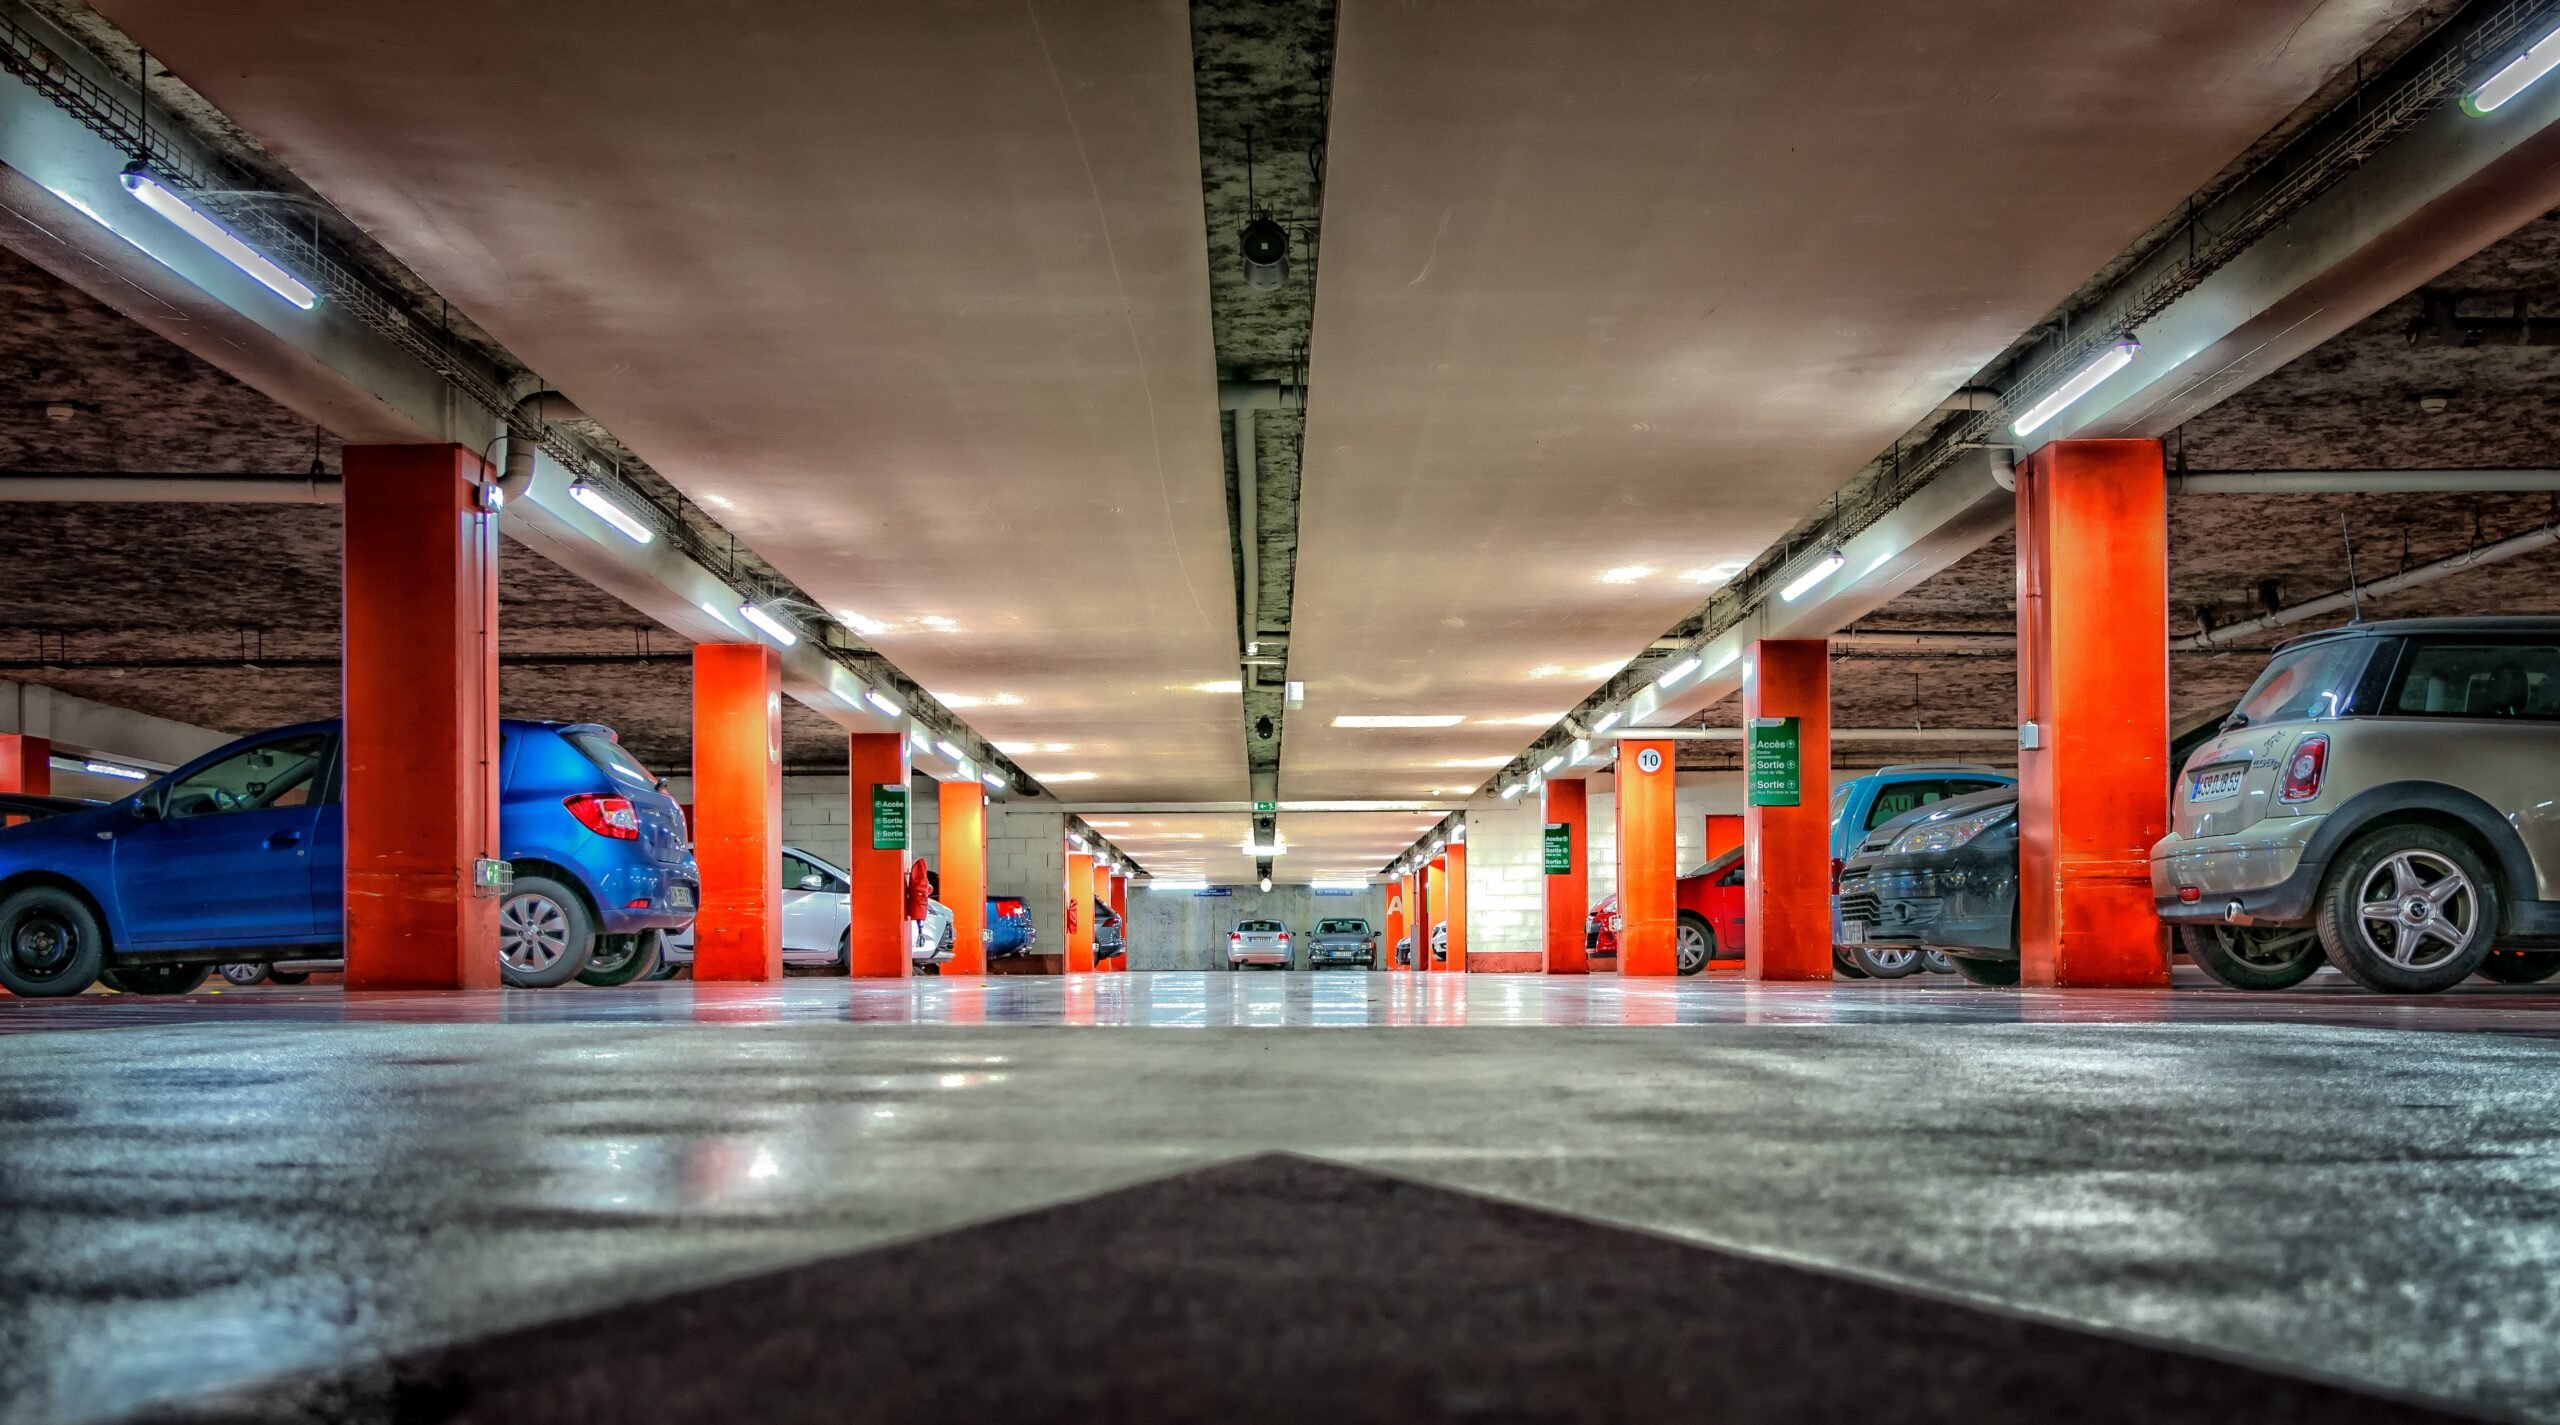 Illuminated underground car park